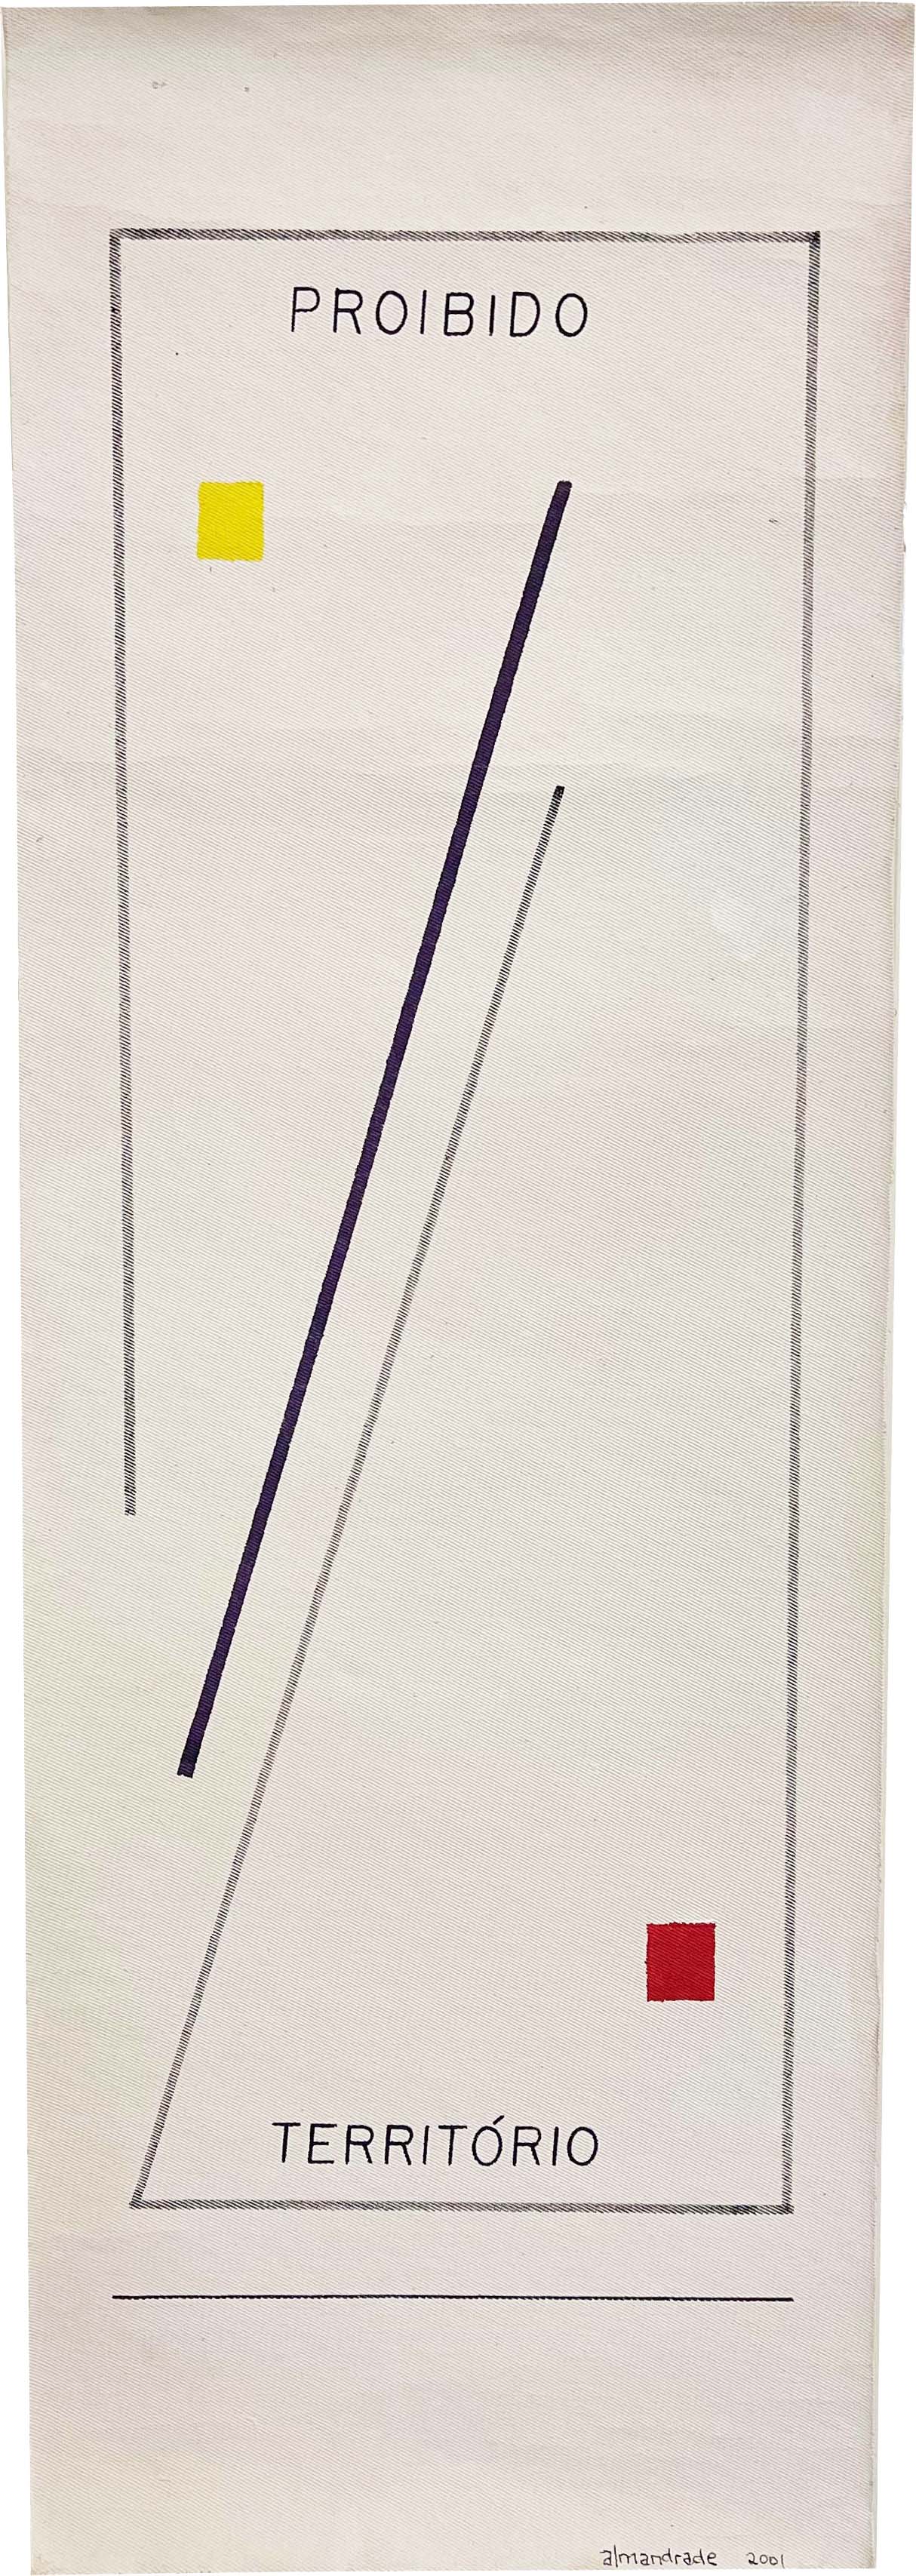 05. Almandrade, Território Proibido, 1989 2001, Acrílica sobre lona, 81 x 28 cm